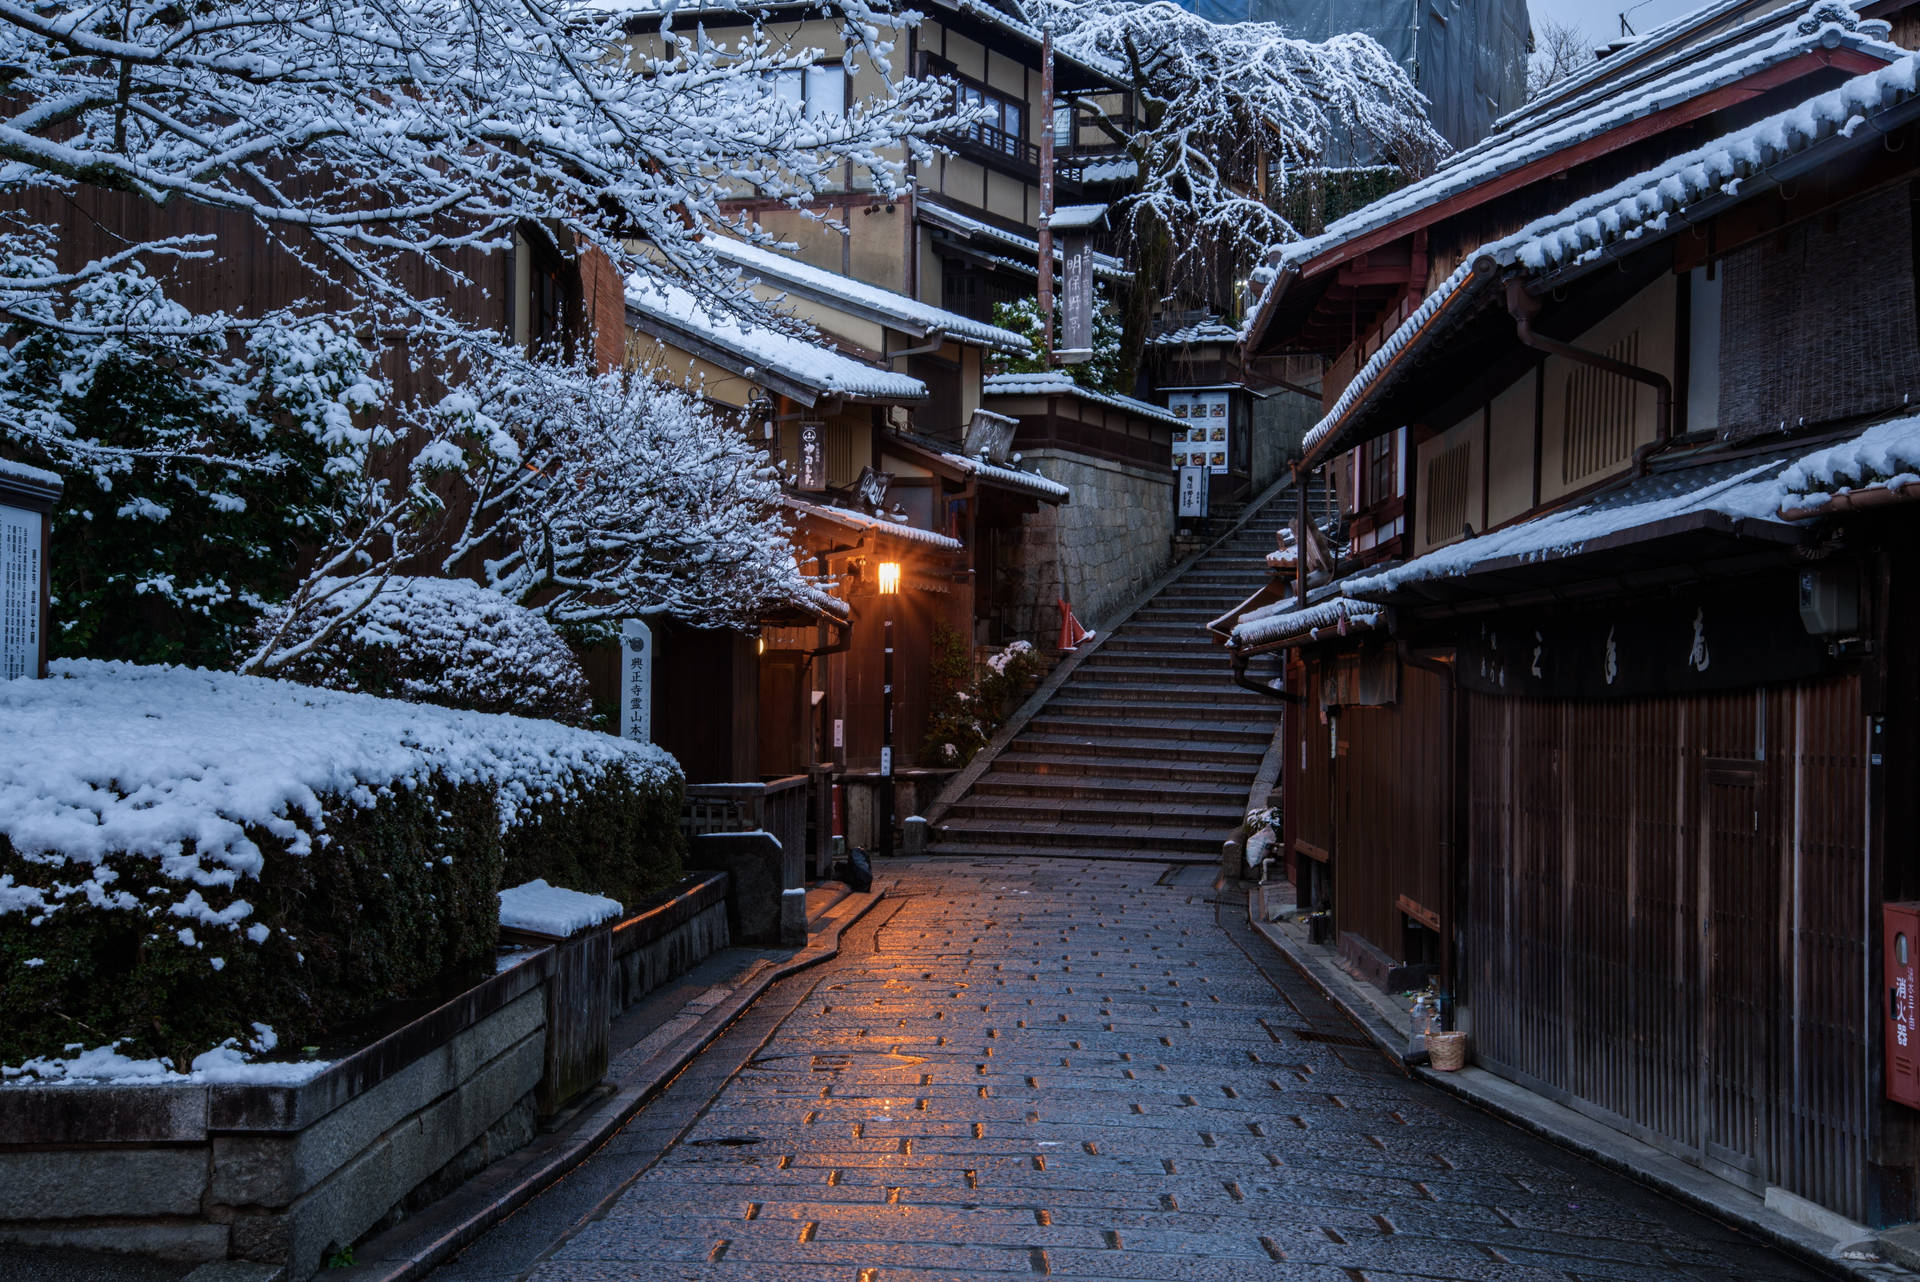 Snowy Kyoto Japan 4k